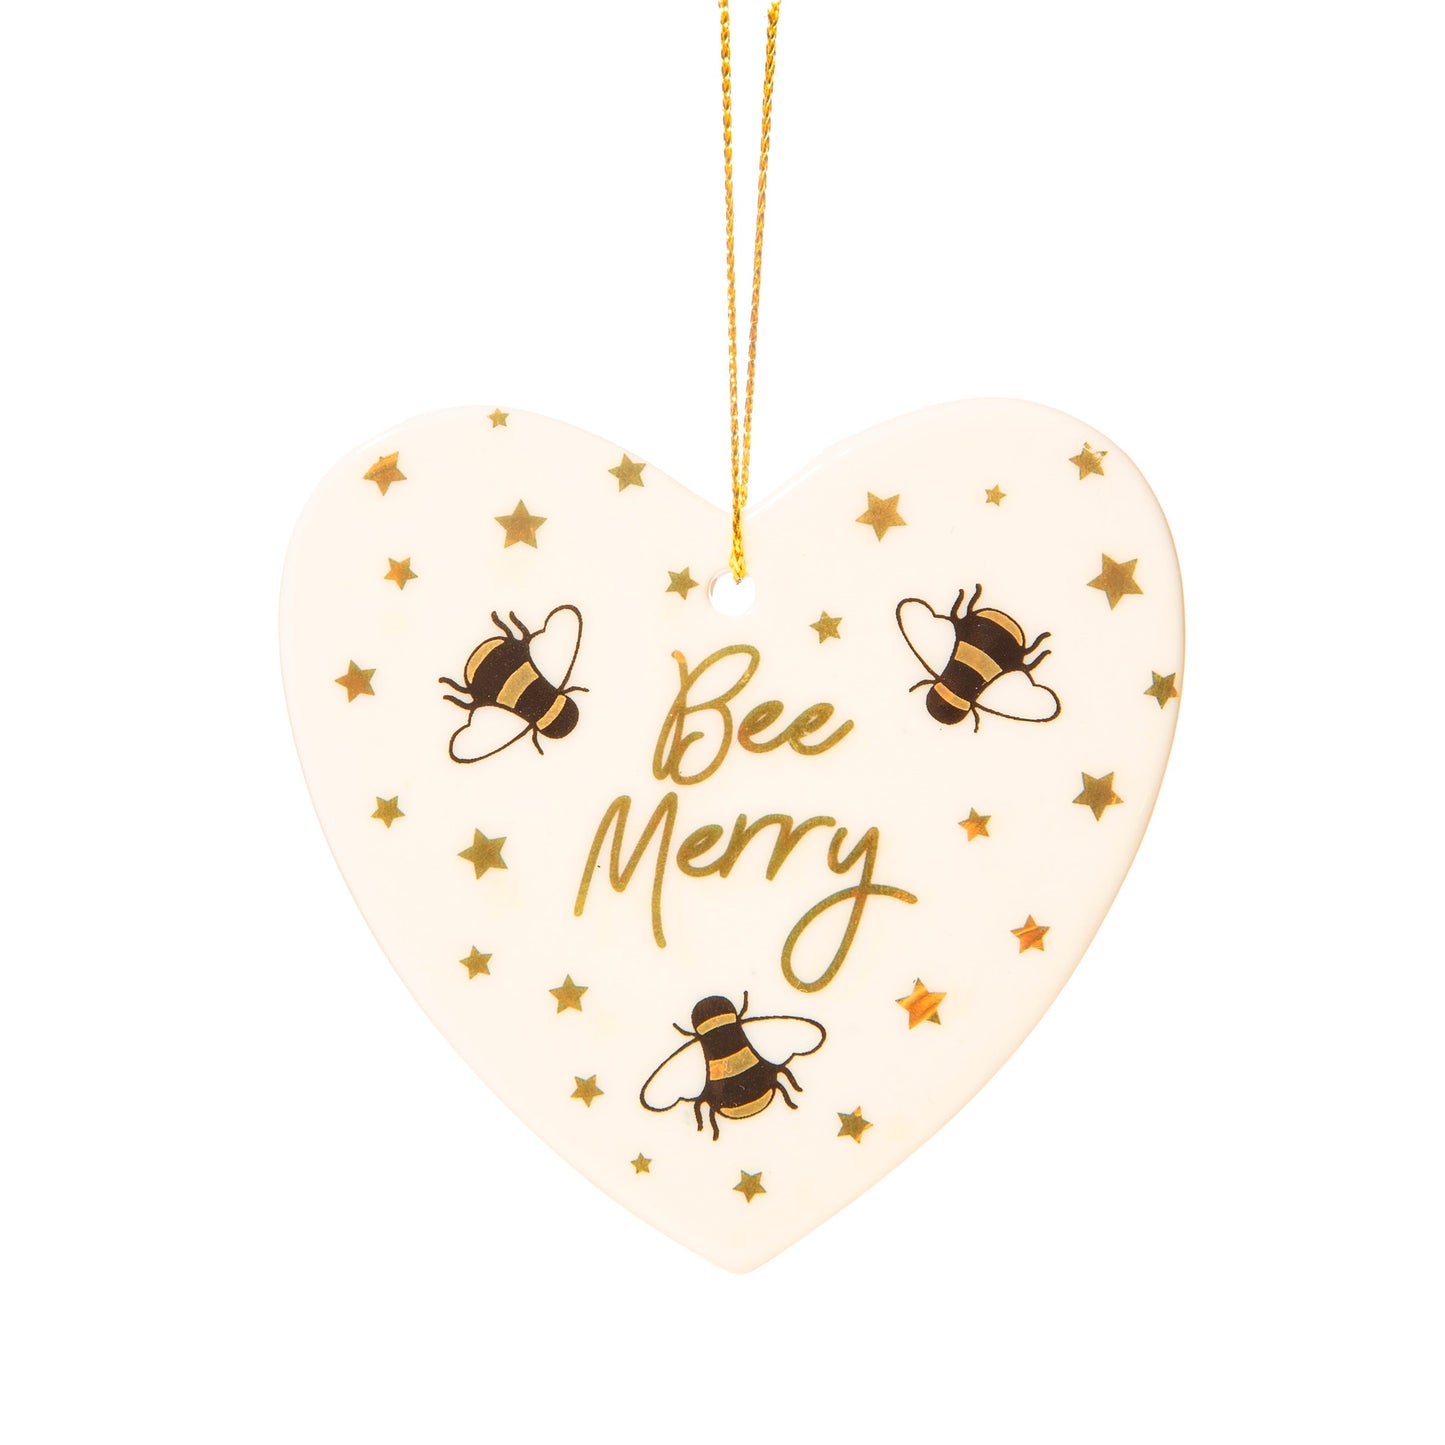 Bee Merry Heart Shaped Ceramic Christmas Tree Decoration